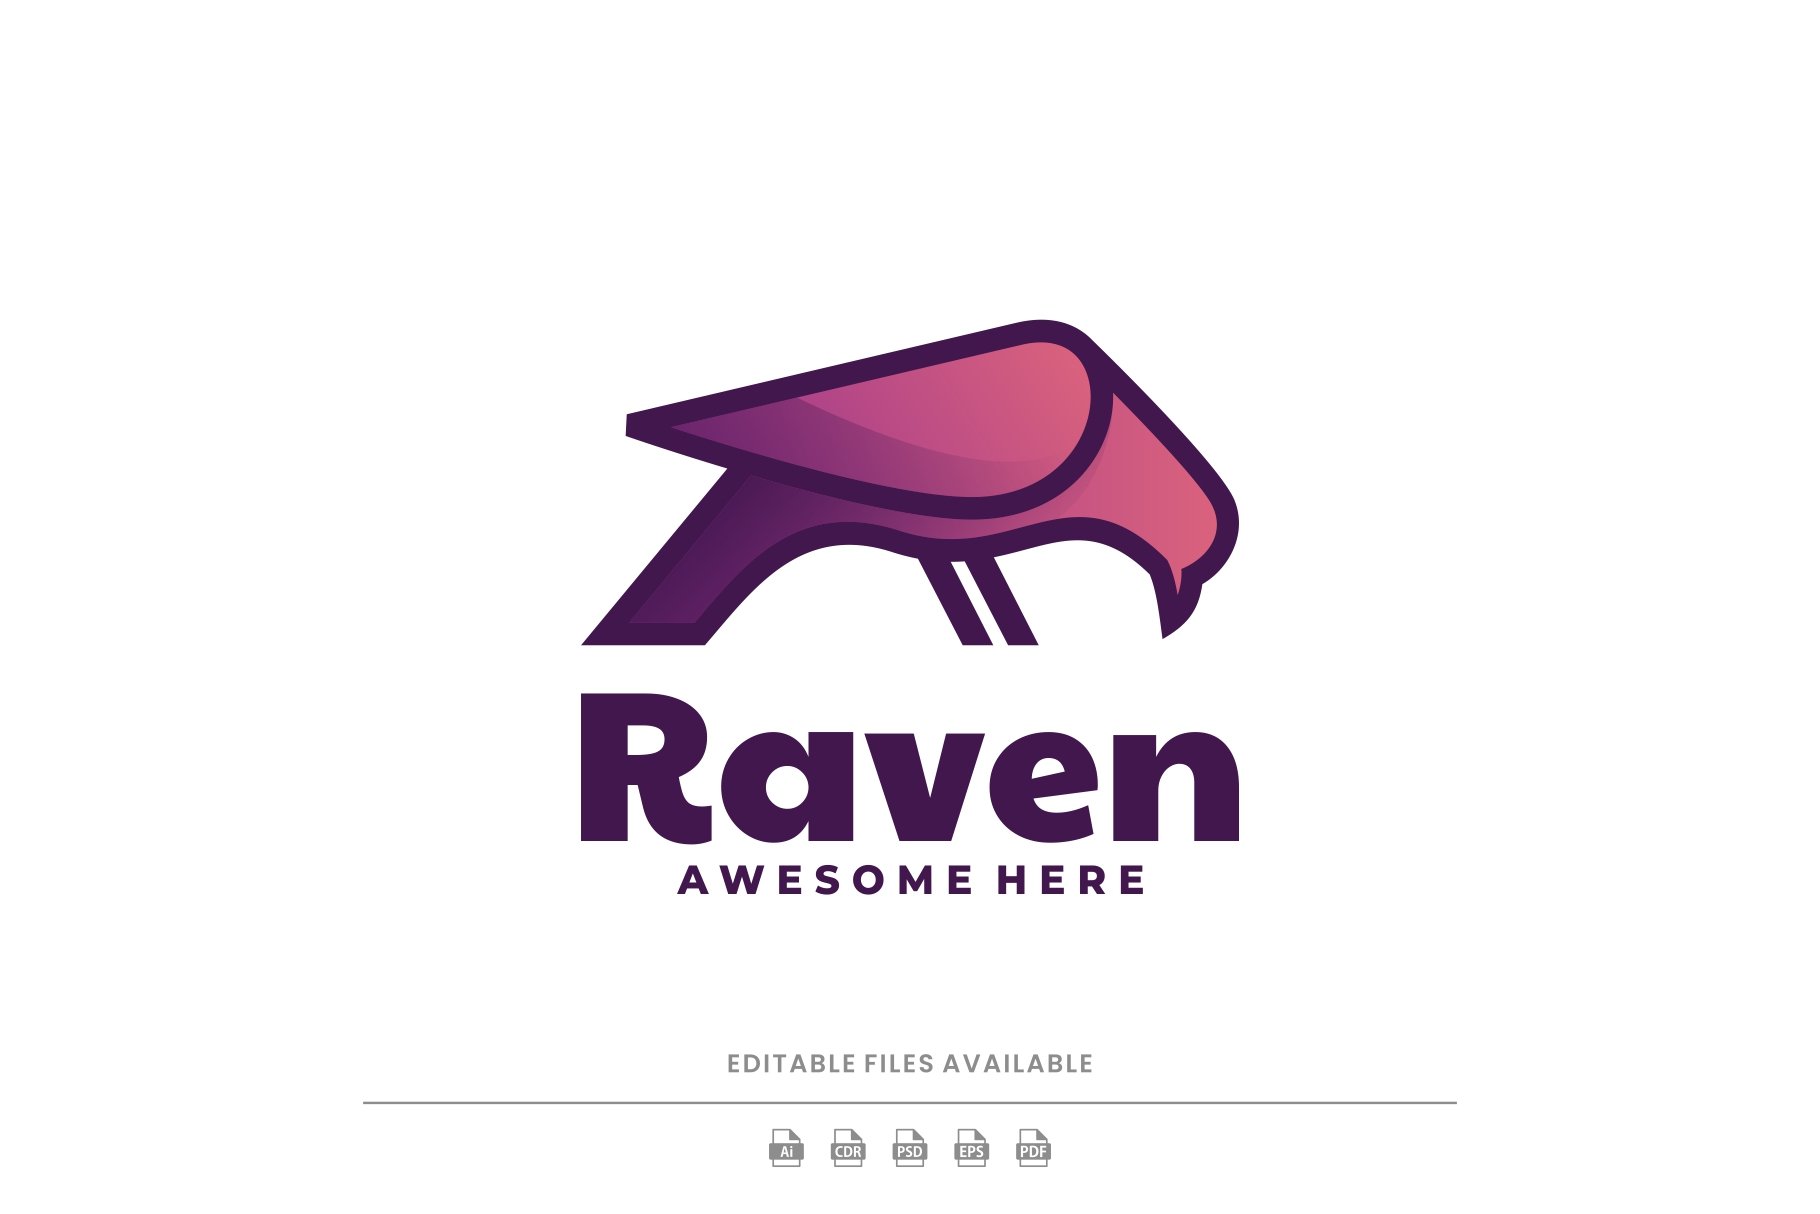 Raven Gradient Logo cover image.